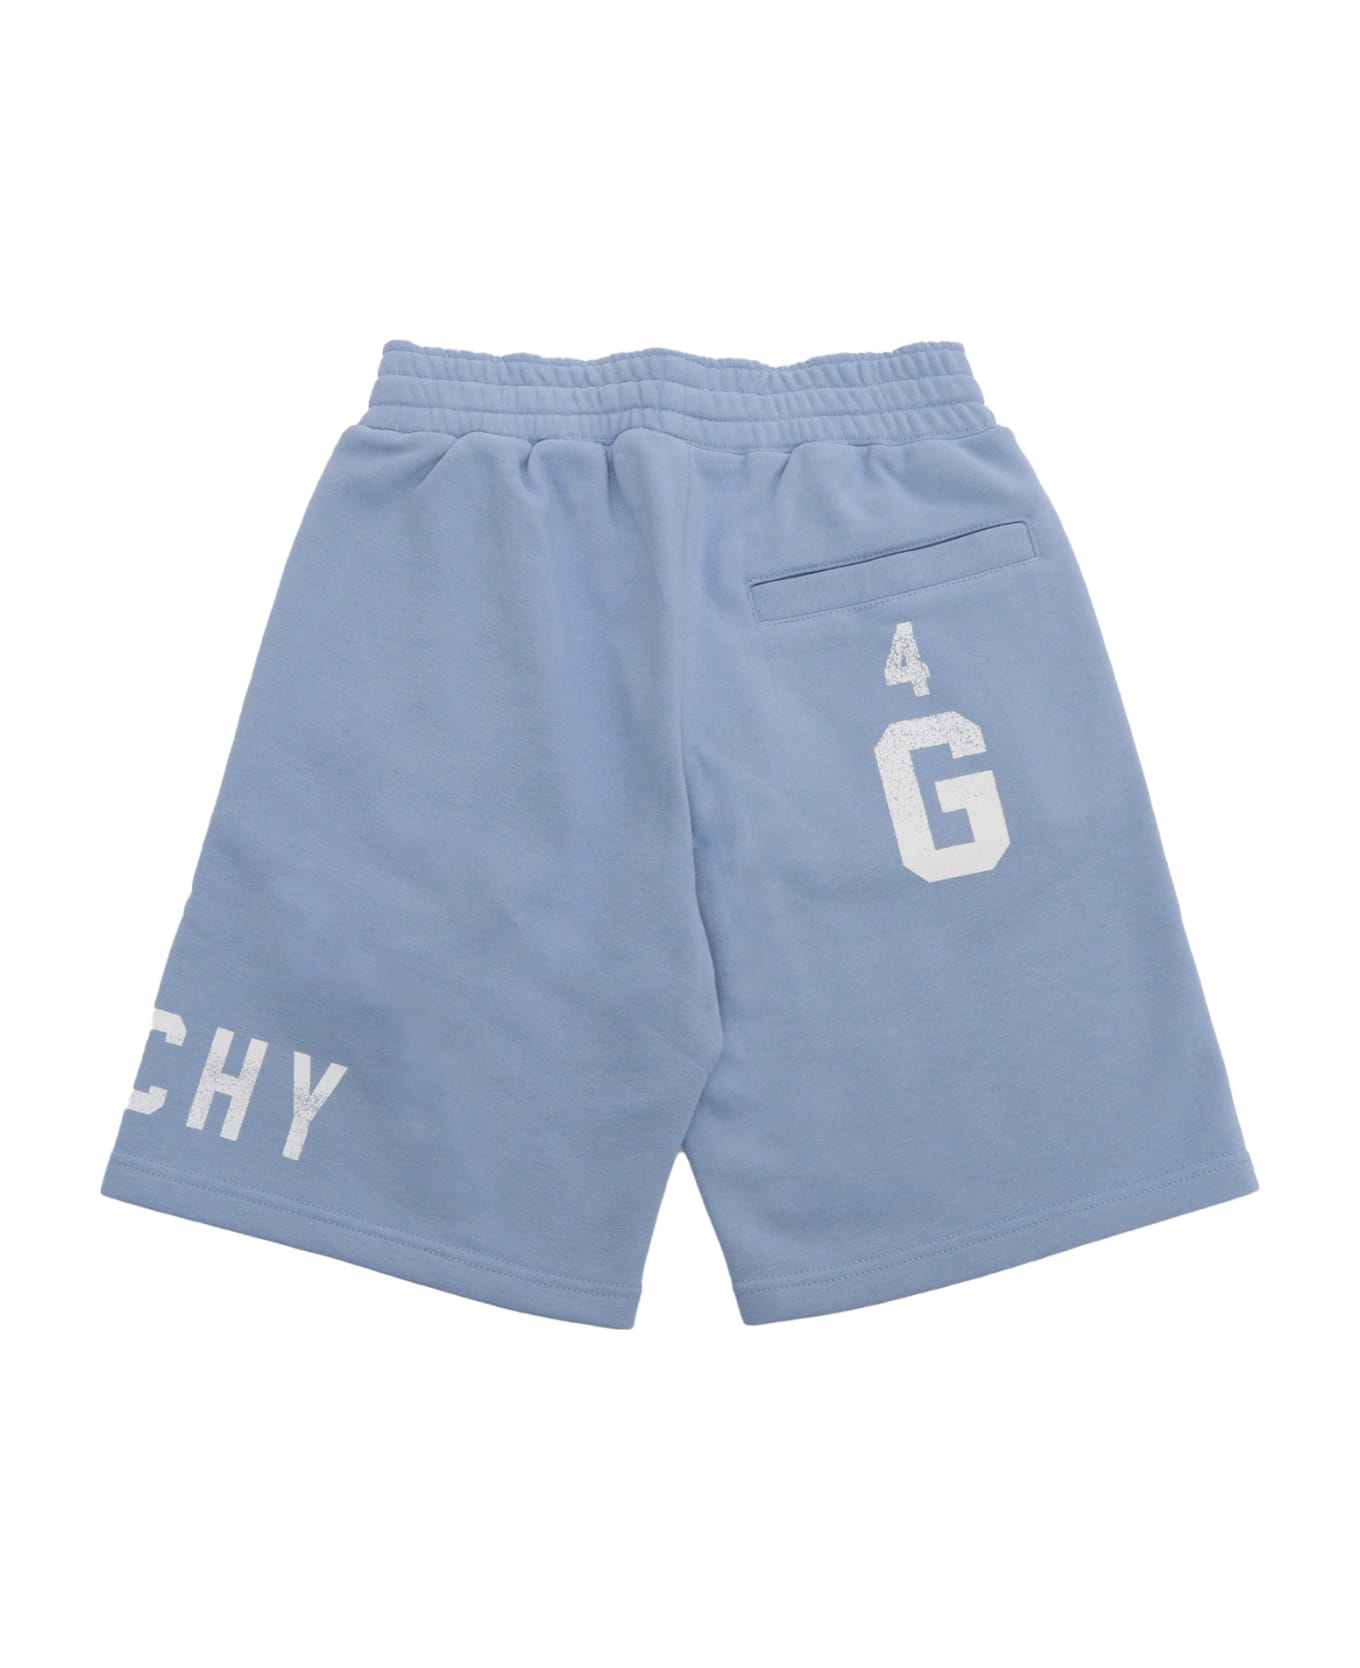 Givenchy Light Blue Shorts - BLUE